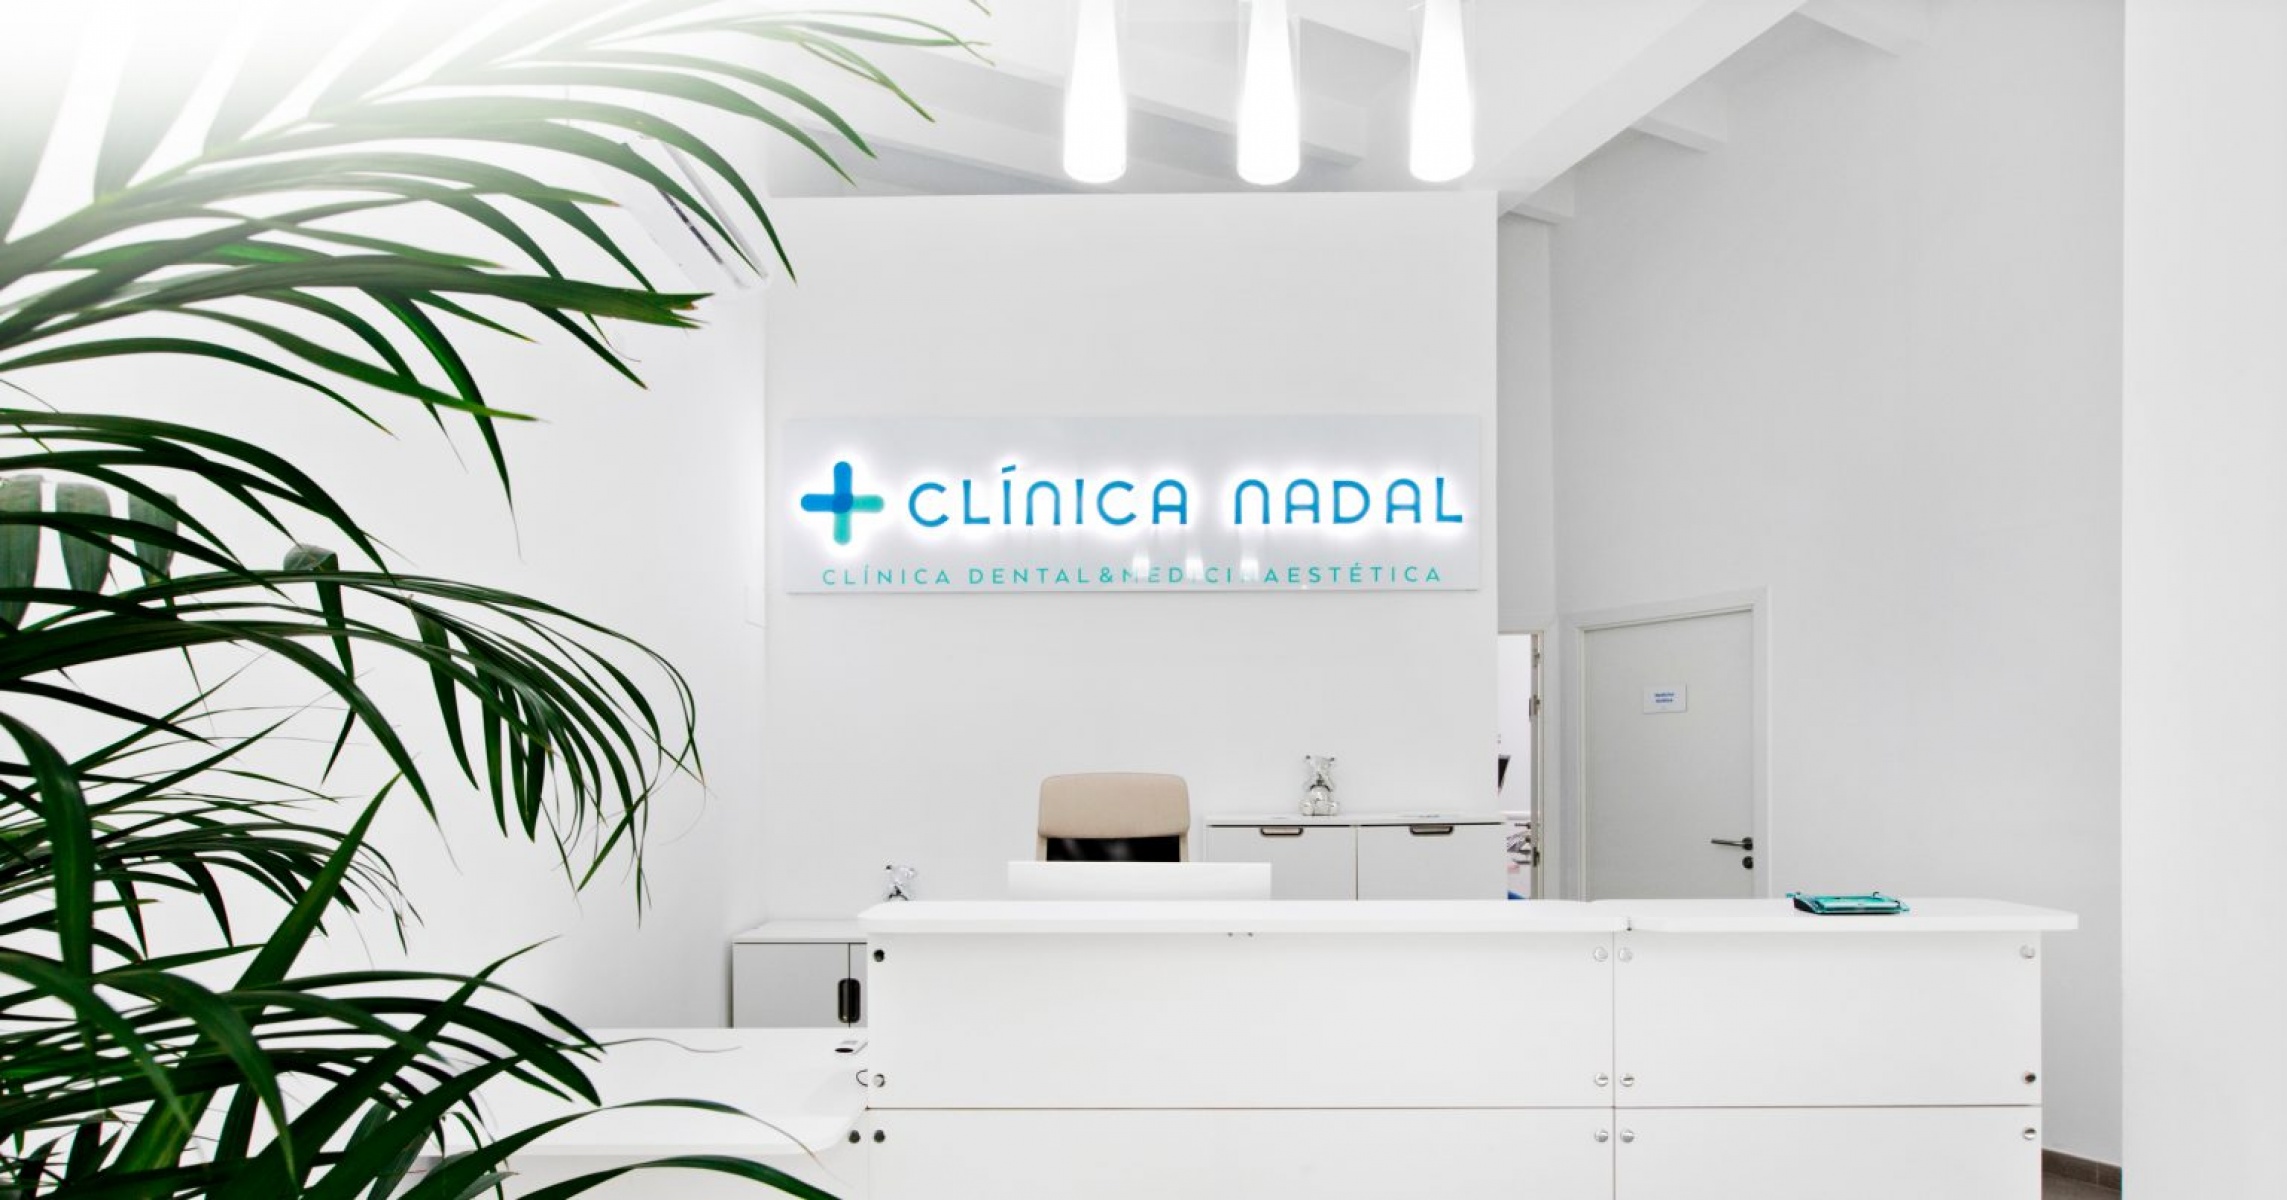 (c) Clinicanadalpalma.com